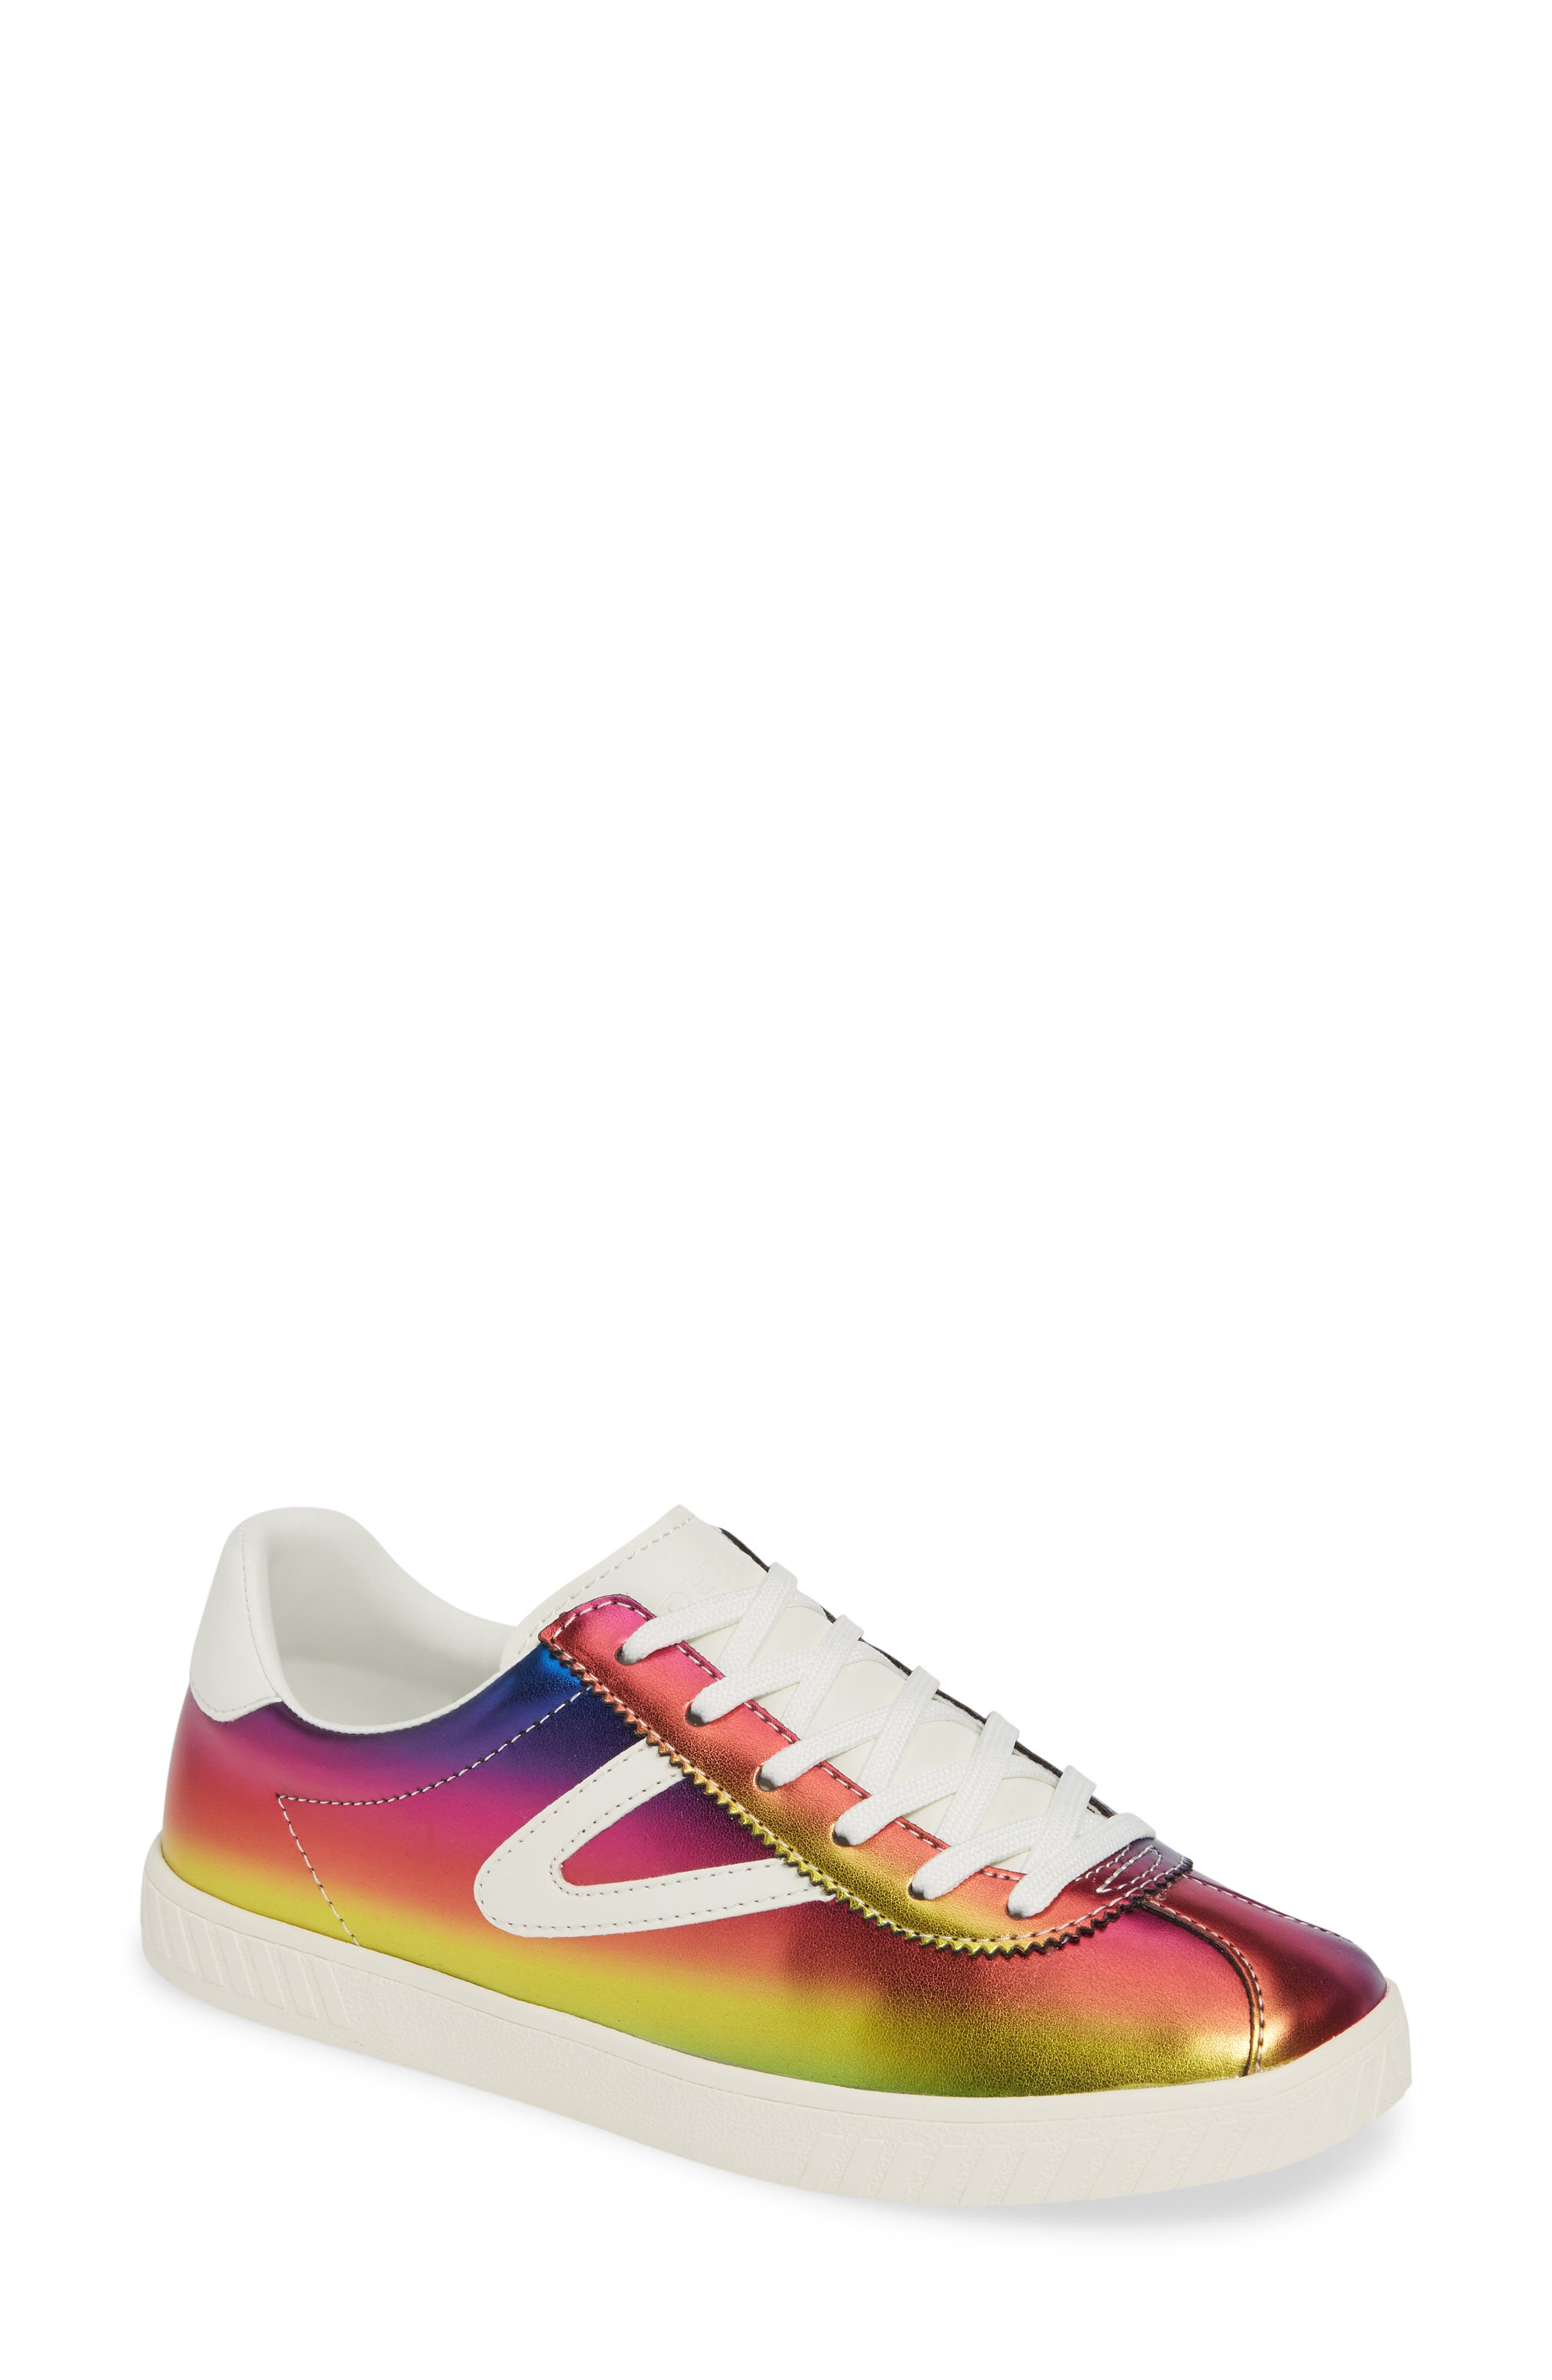 tretorn iridescent sneakers